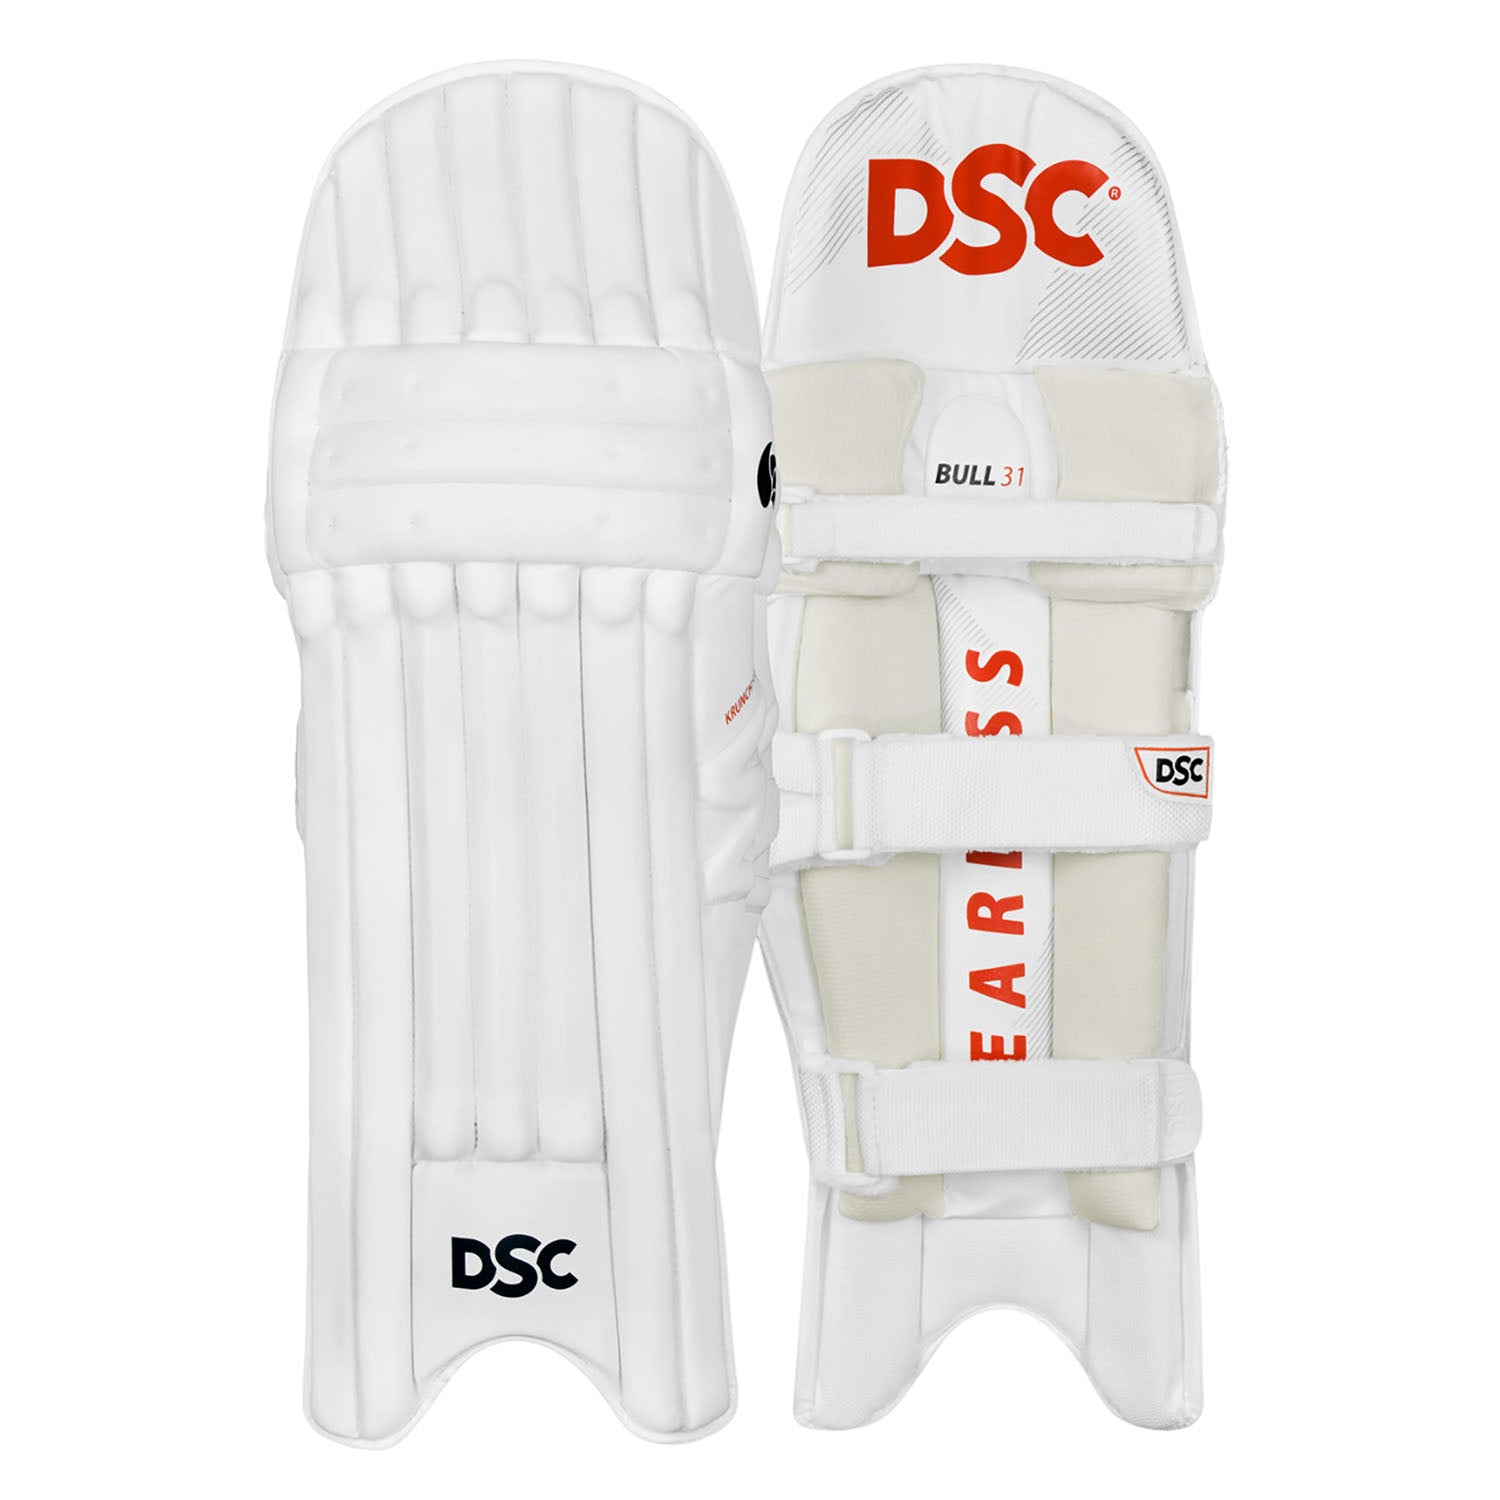 DSC Krunch Bull 31 Cricket Batting Pad - Stagsports Cricket Store